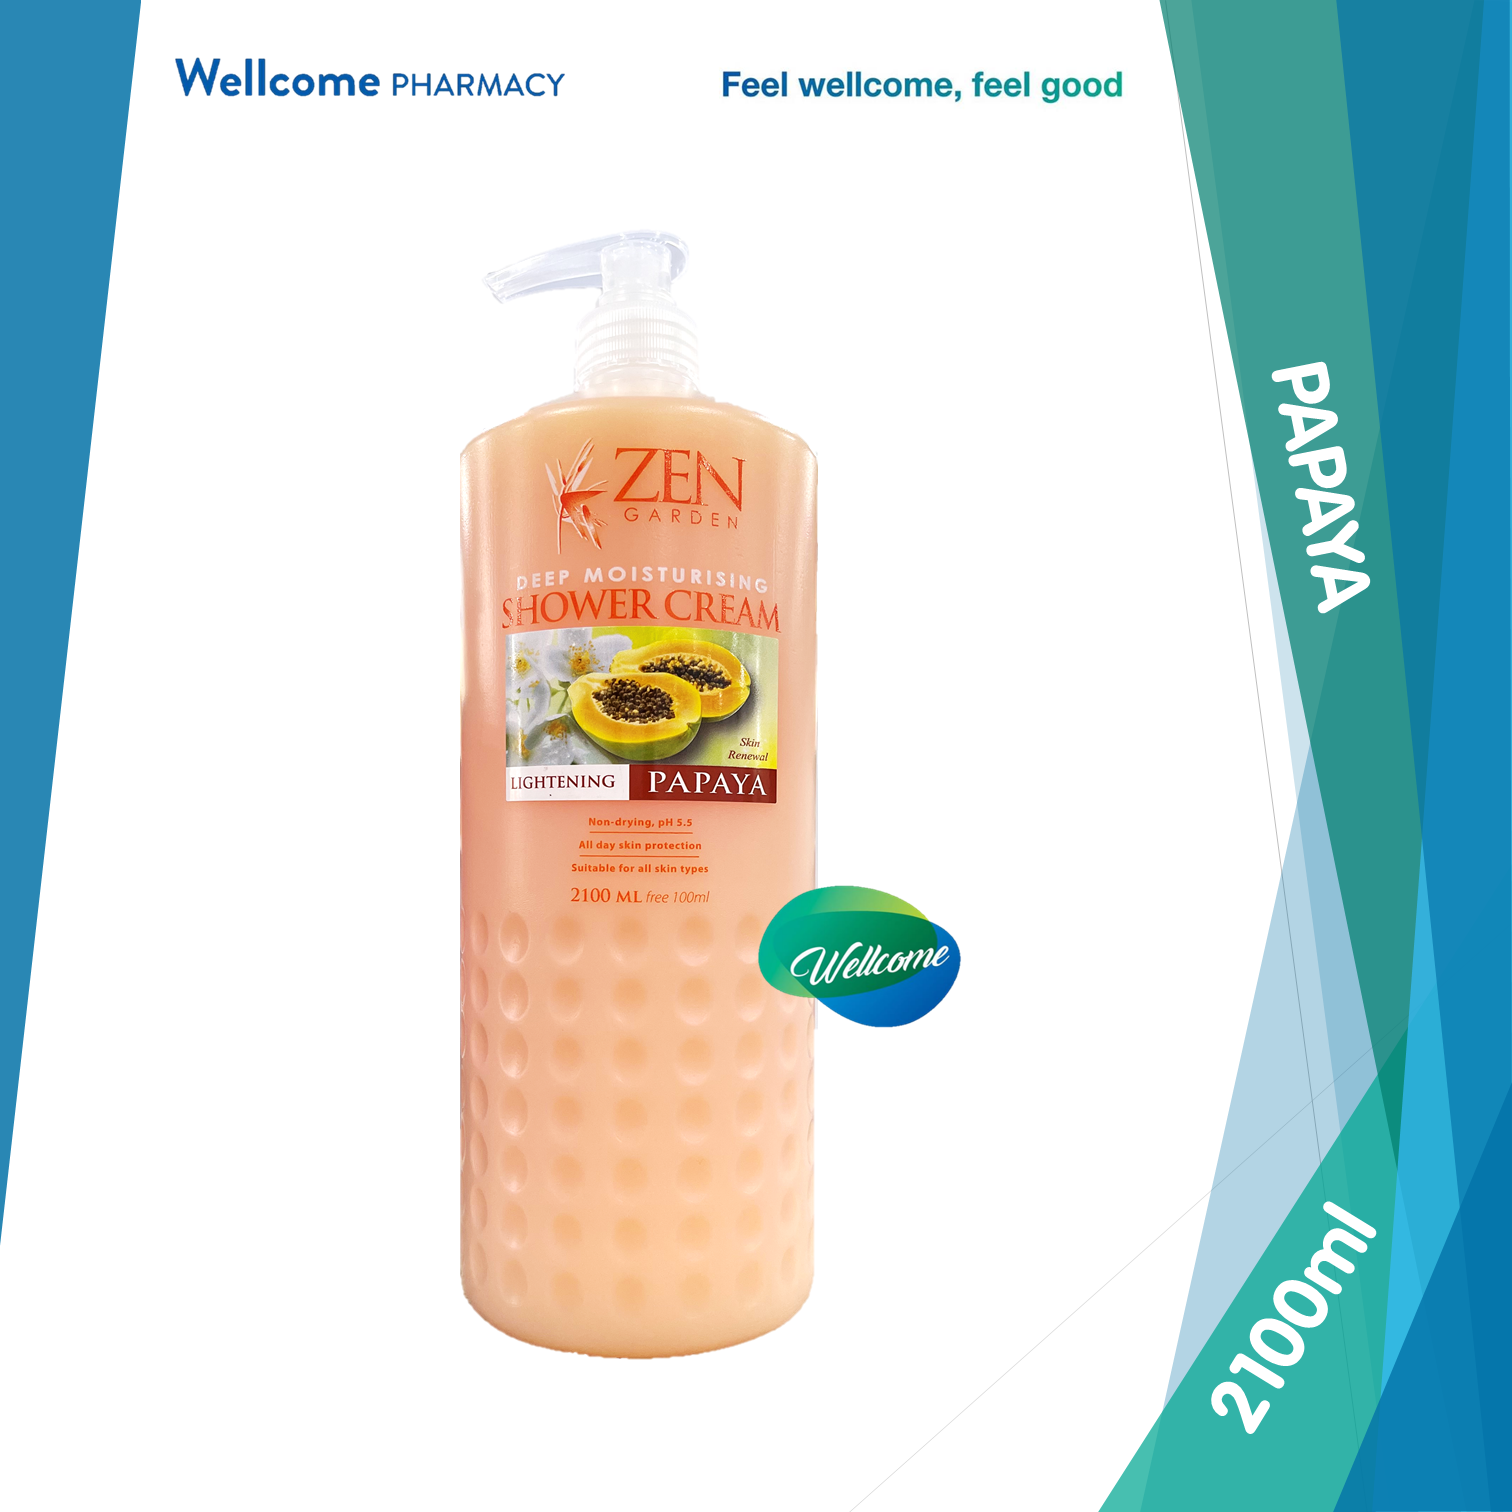 Zen Garden Shower Cream Papaya - 2100ml.png